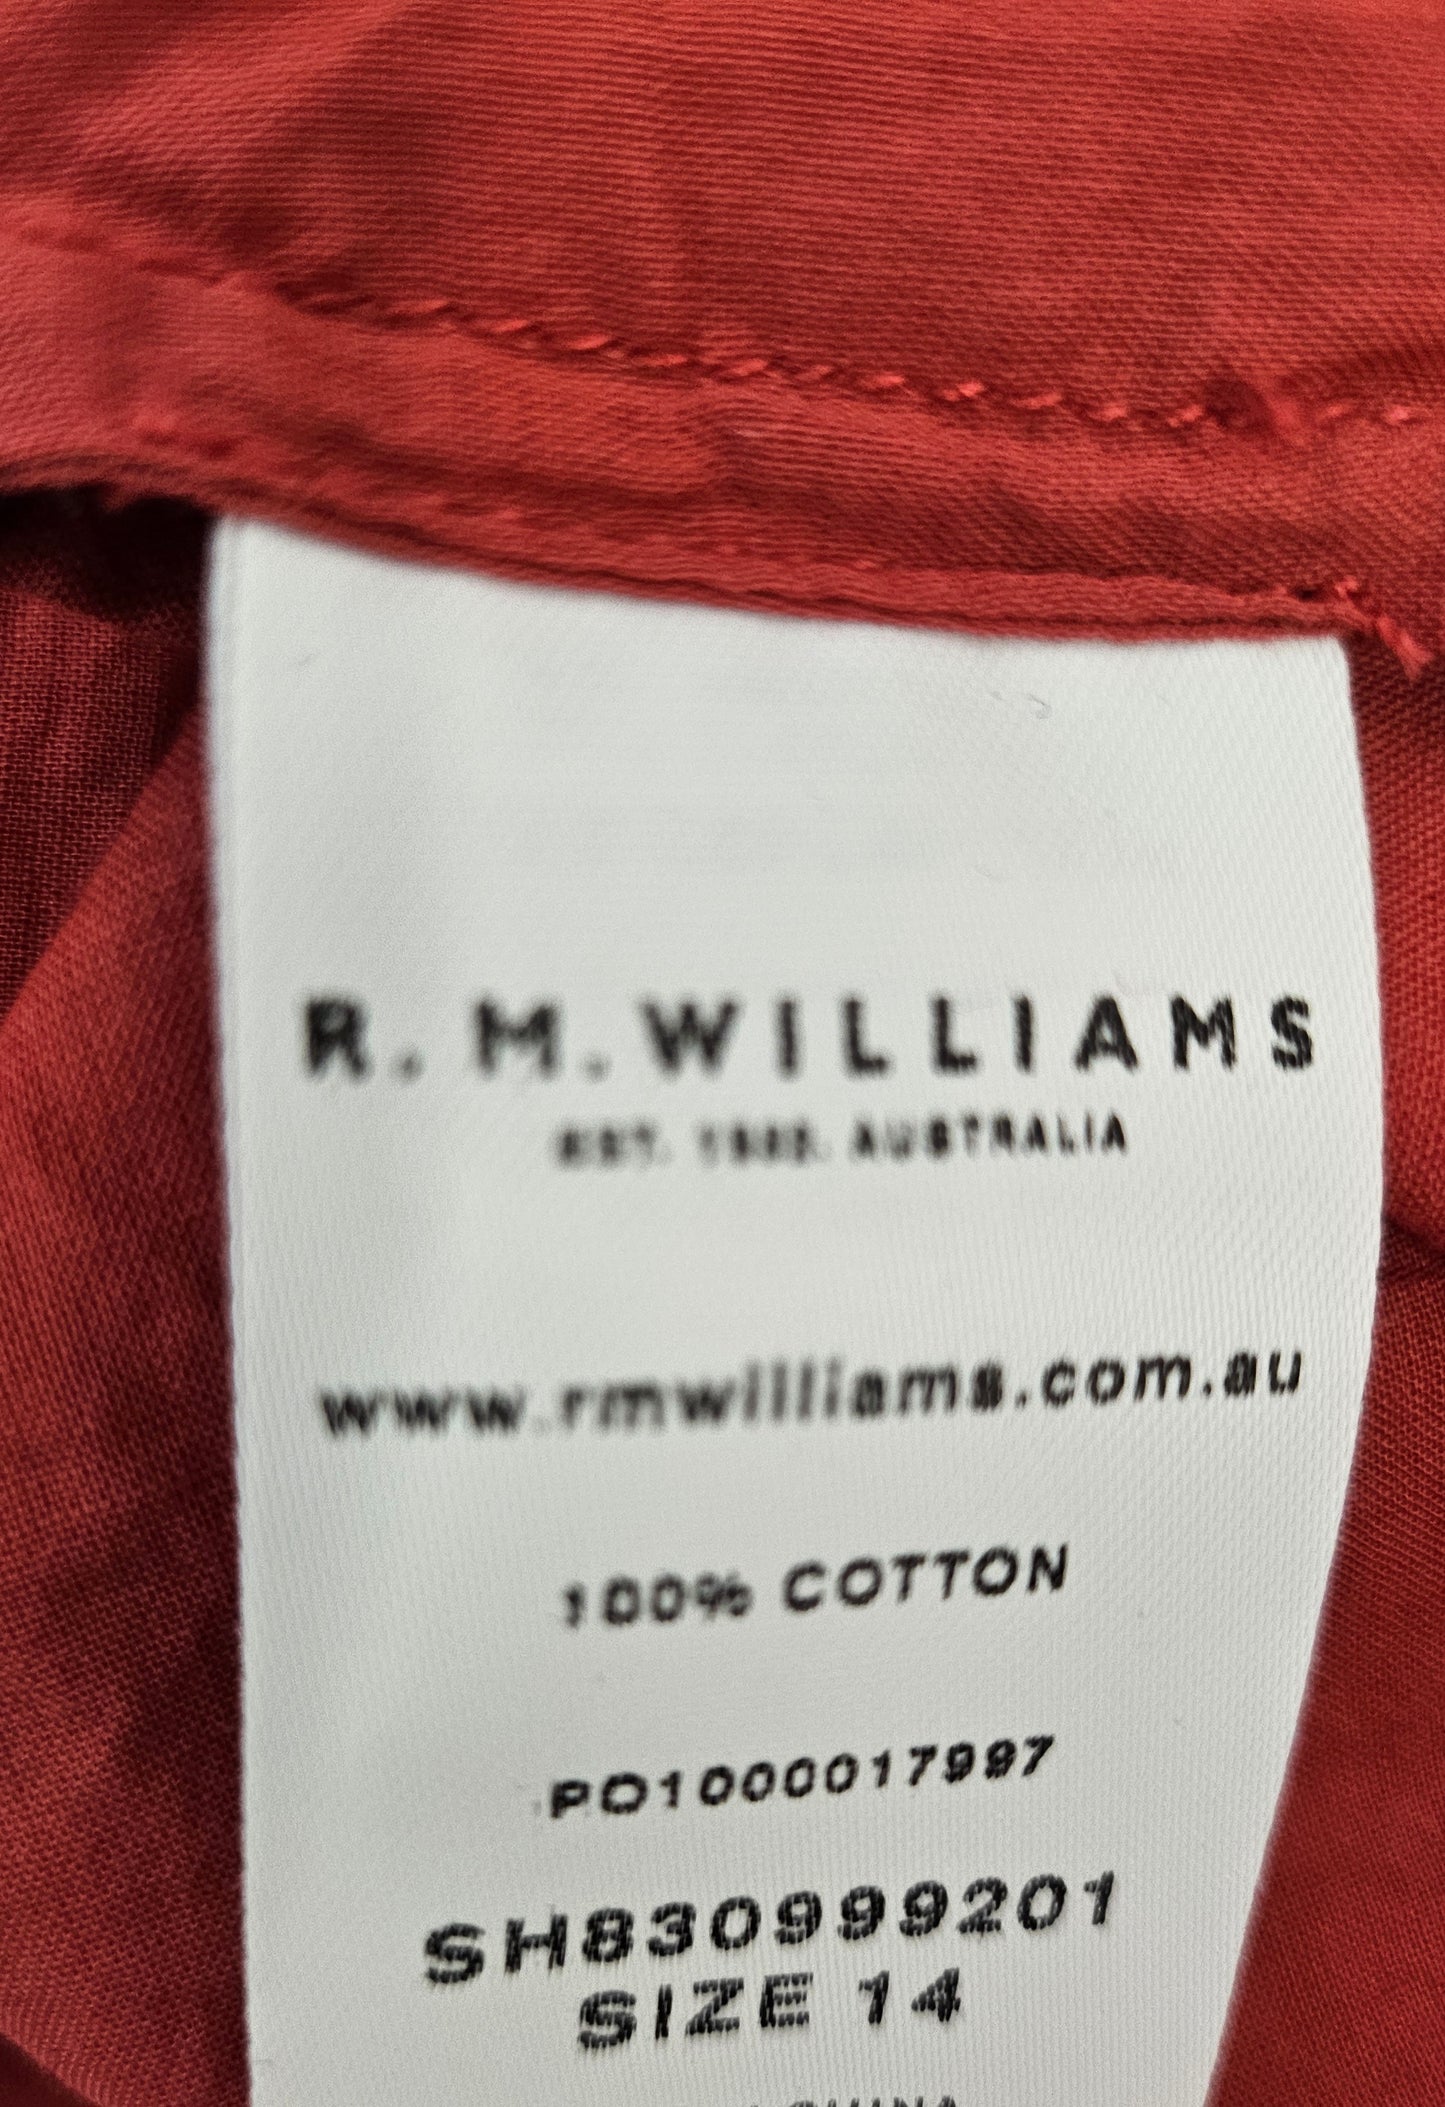 RM Williams Tomato Red/Orange Ruffle Sleeve Top (14)